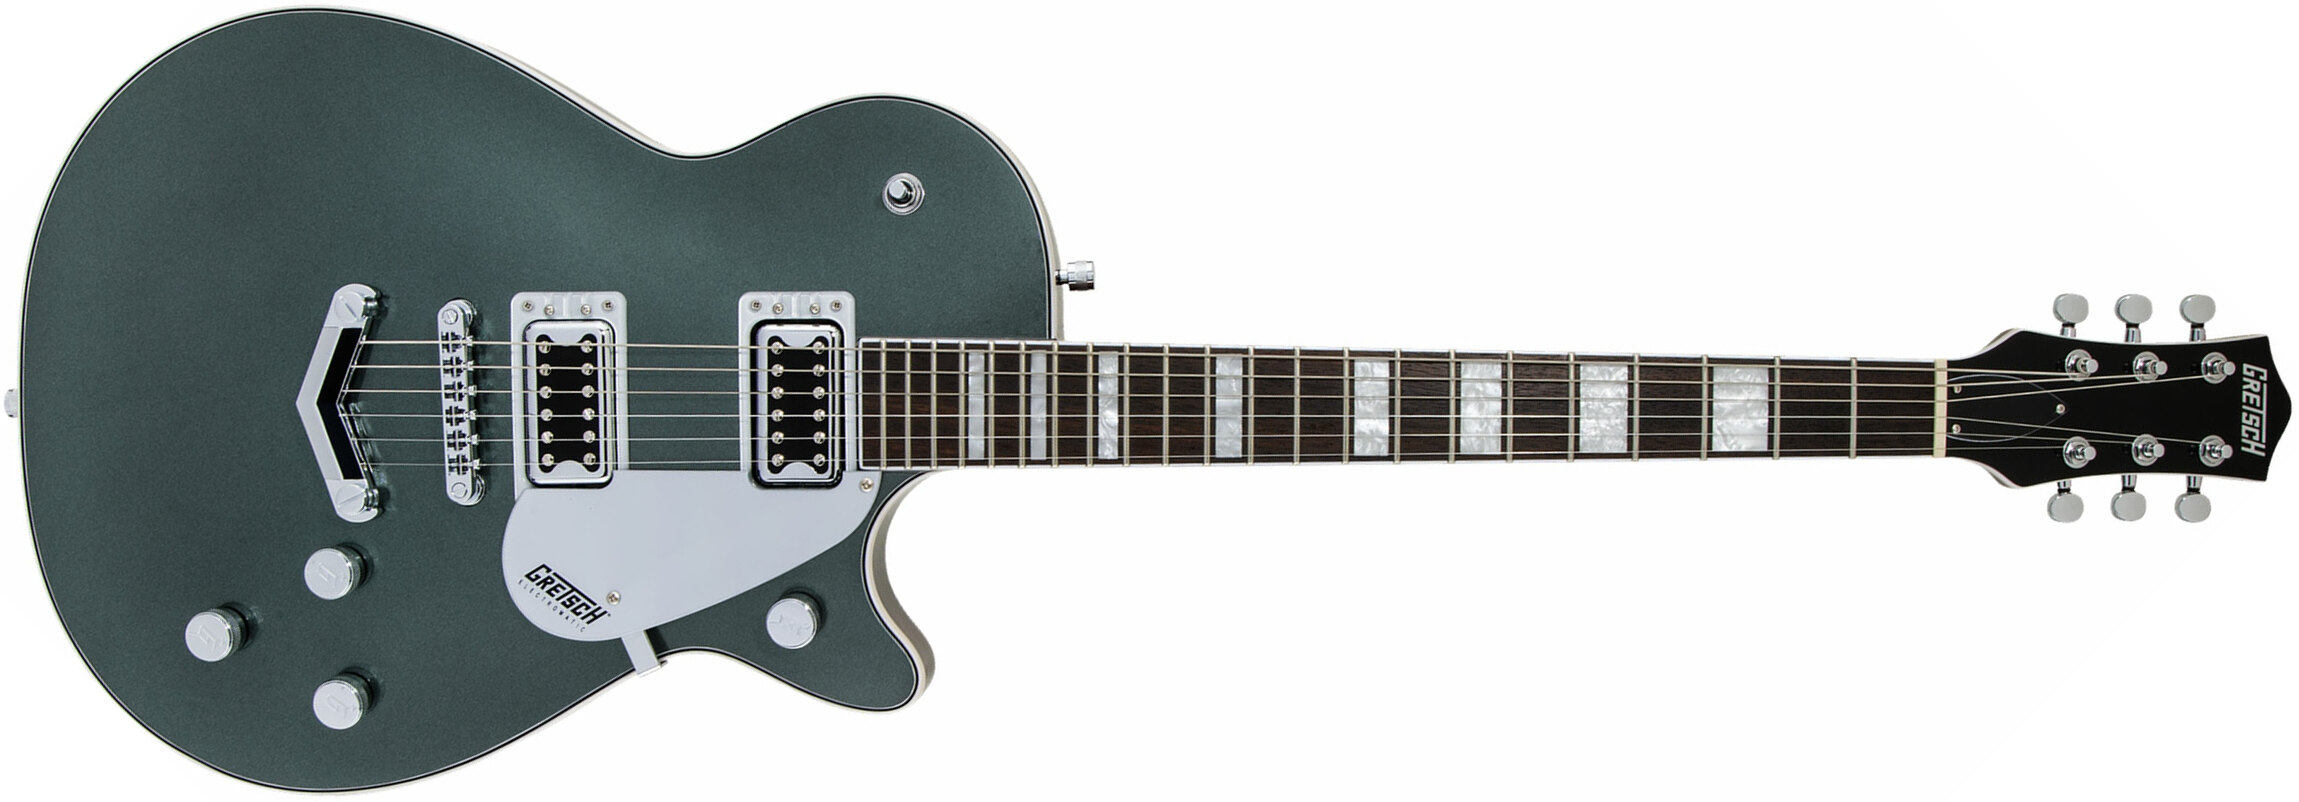 Gretsch G5220 Electromatic Jet Bt V-stoptail Hh Ht Wal - Jade Grey Metallic - Enkel gesneden elektrische gitaar - Main picture